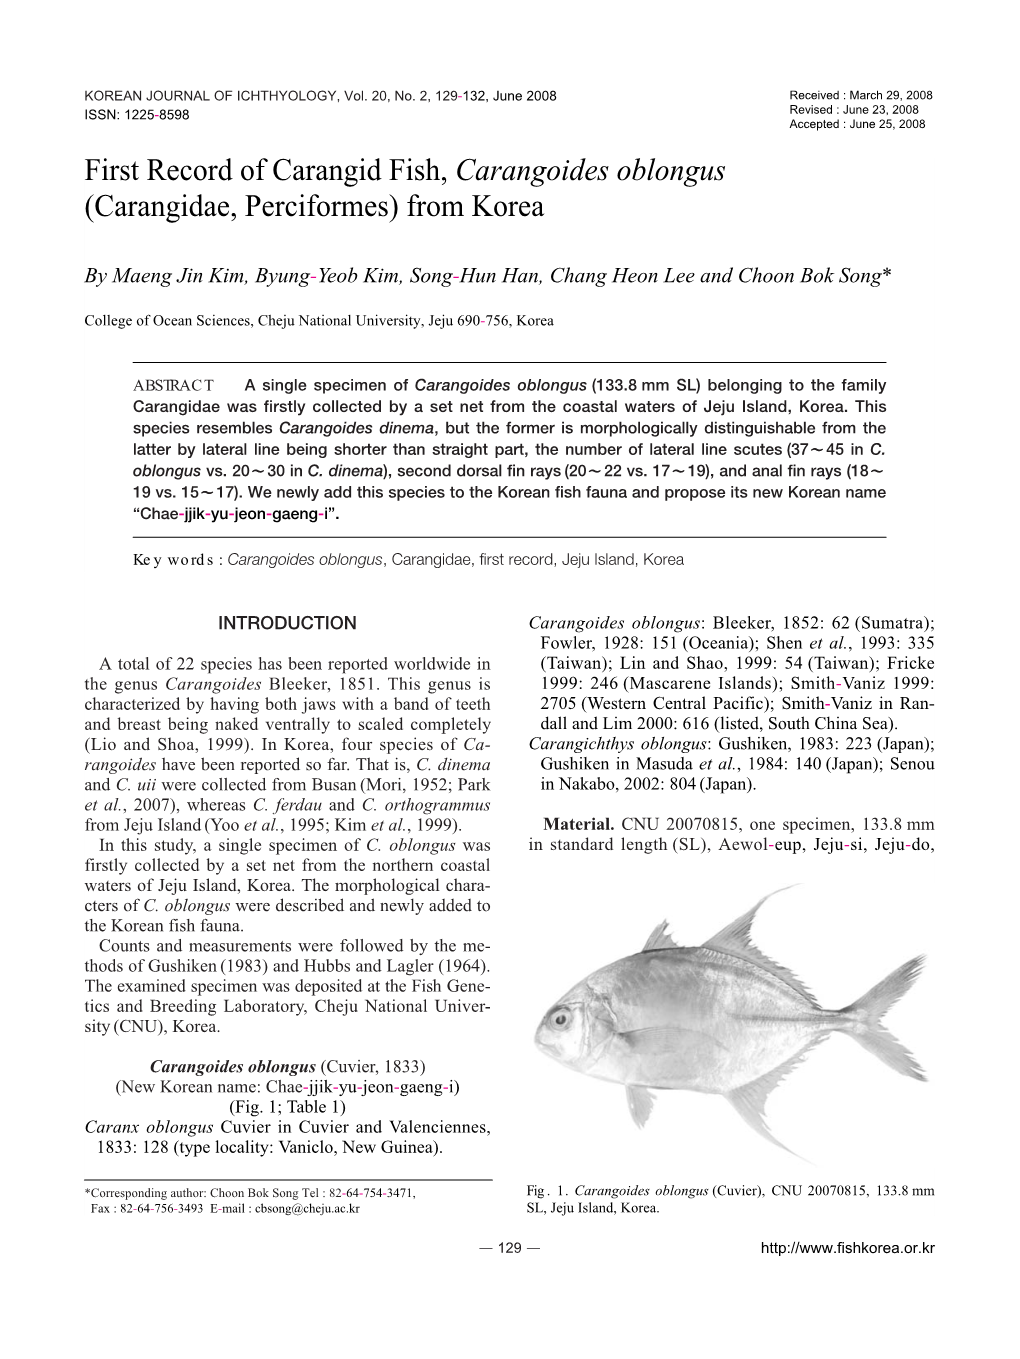 First Record of Carangid Fish, Carangoides Oblongus (Carangidae, Perciformes) from Korea